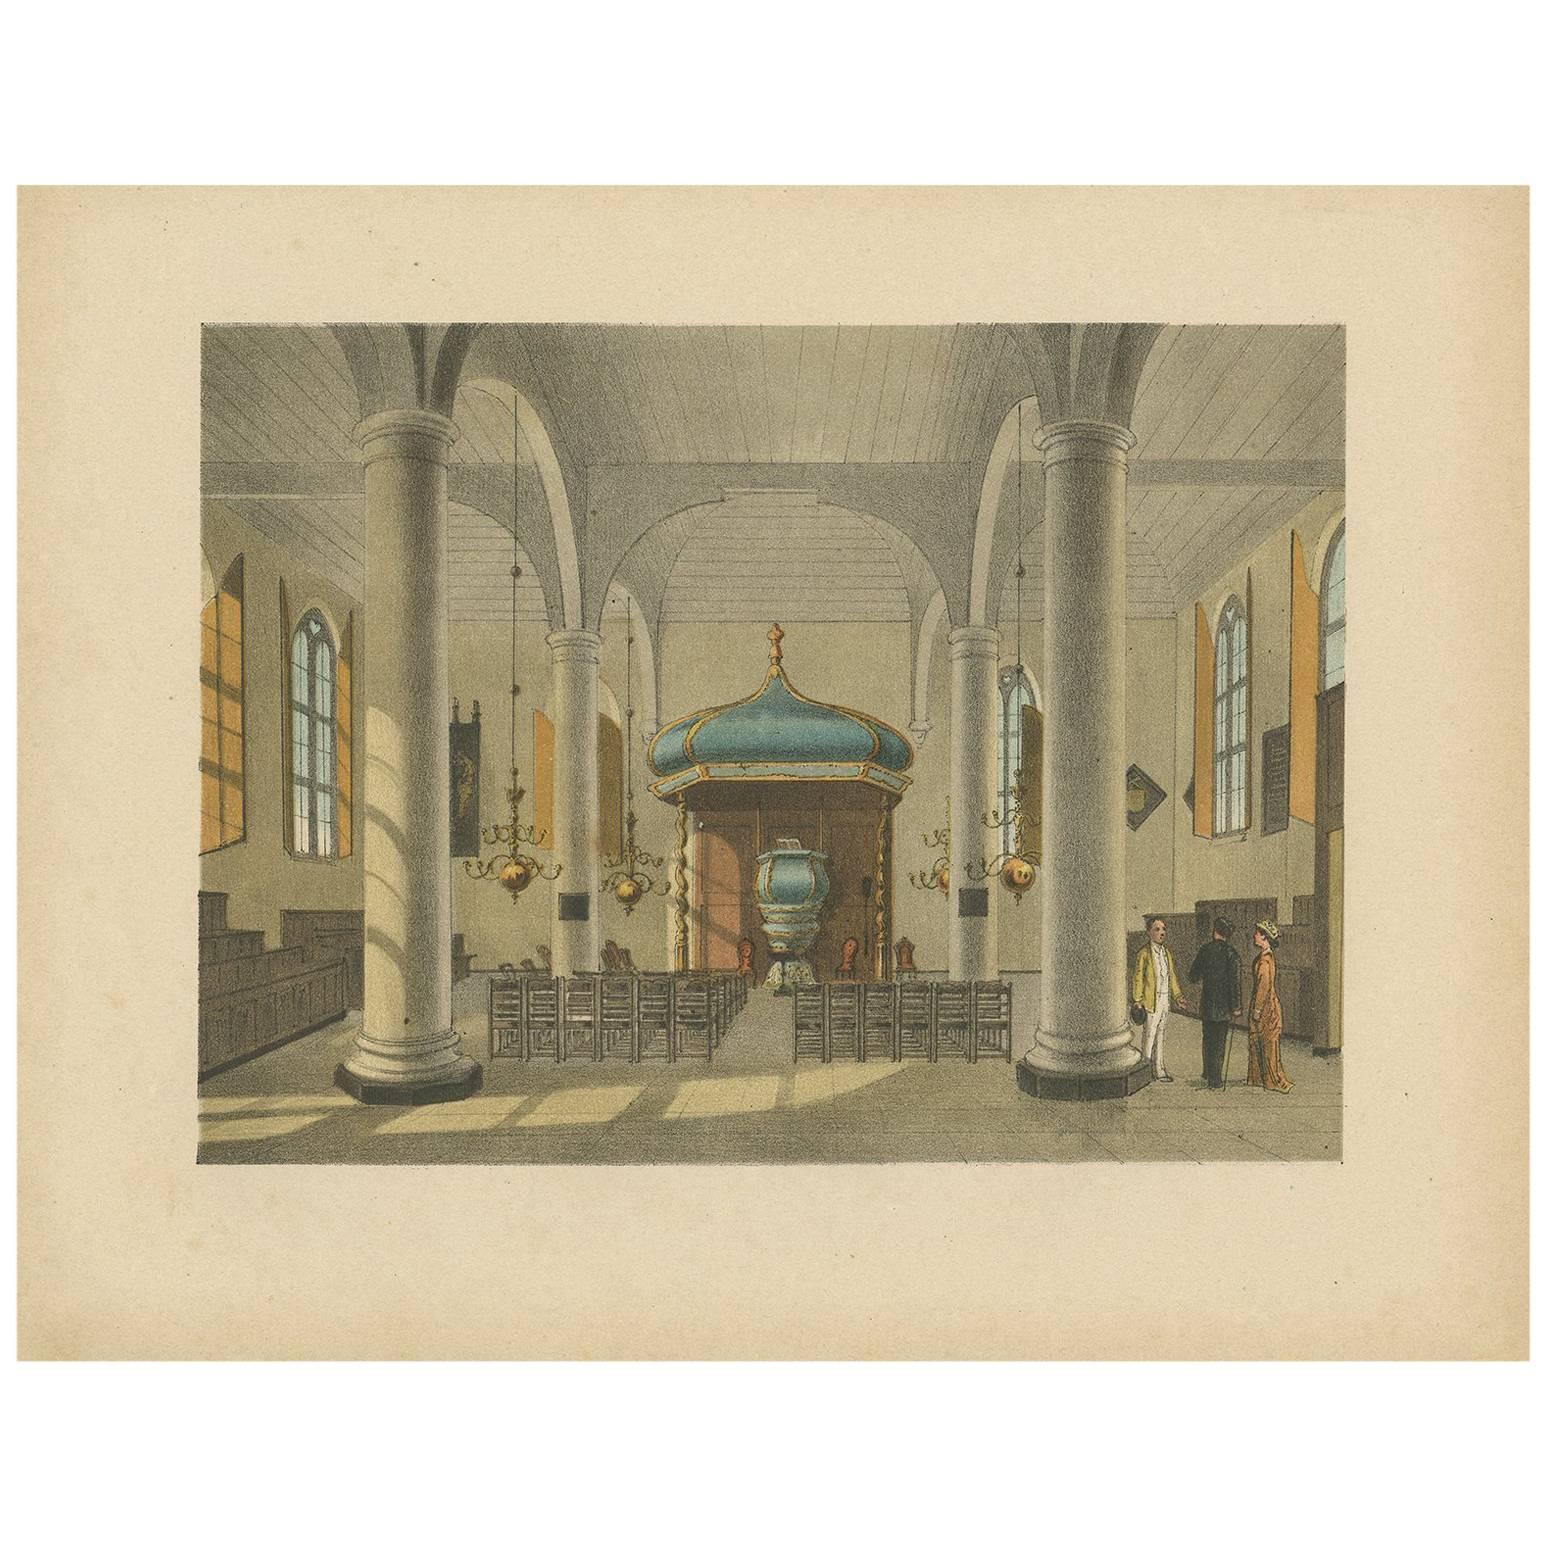 Antique Print of a Church Interior in Batavia by M.T.H. Perelaer, 1888